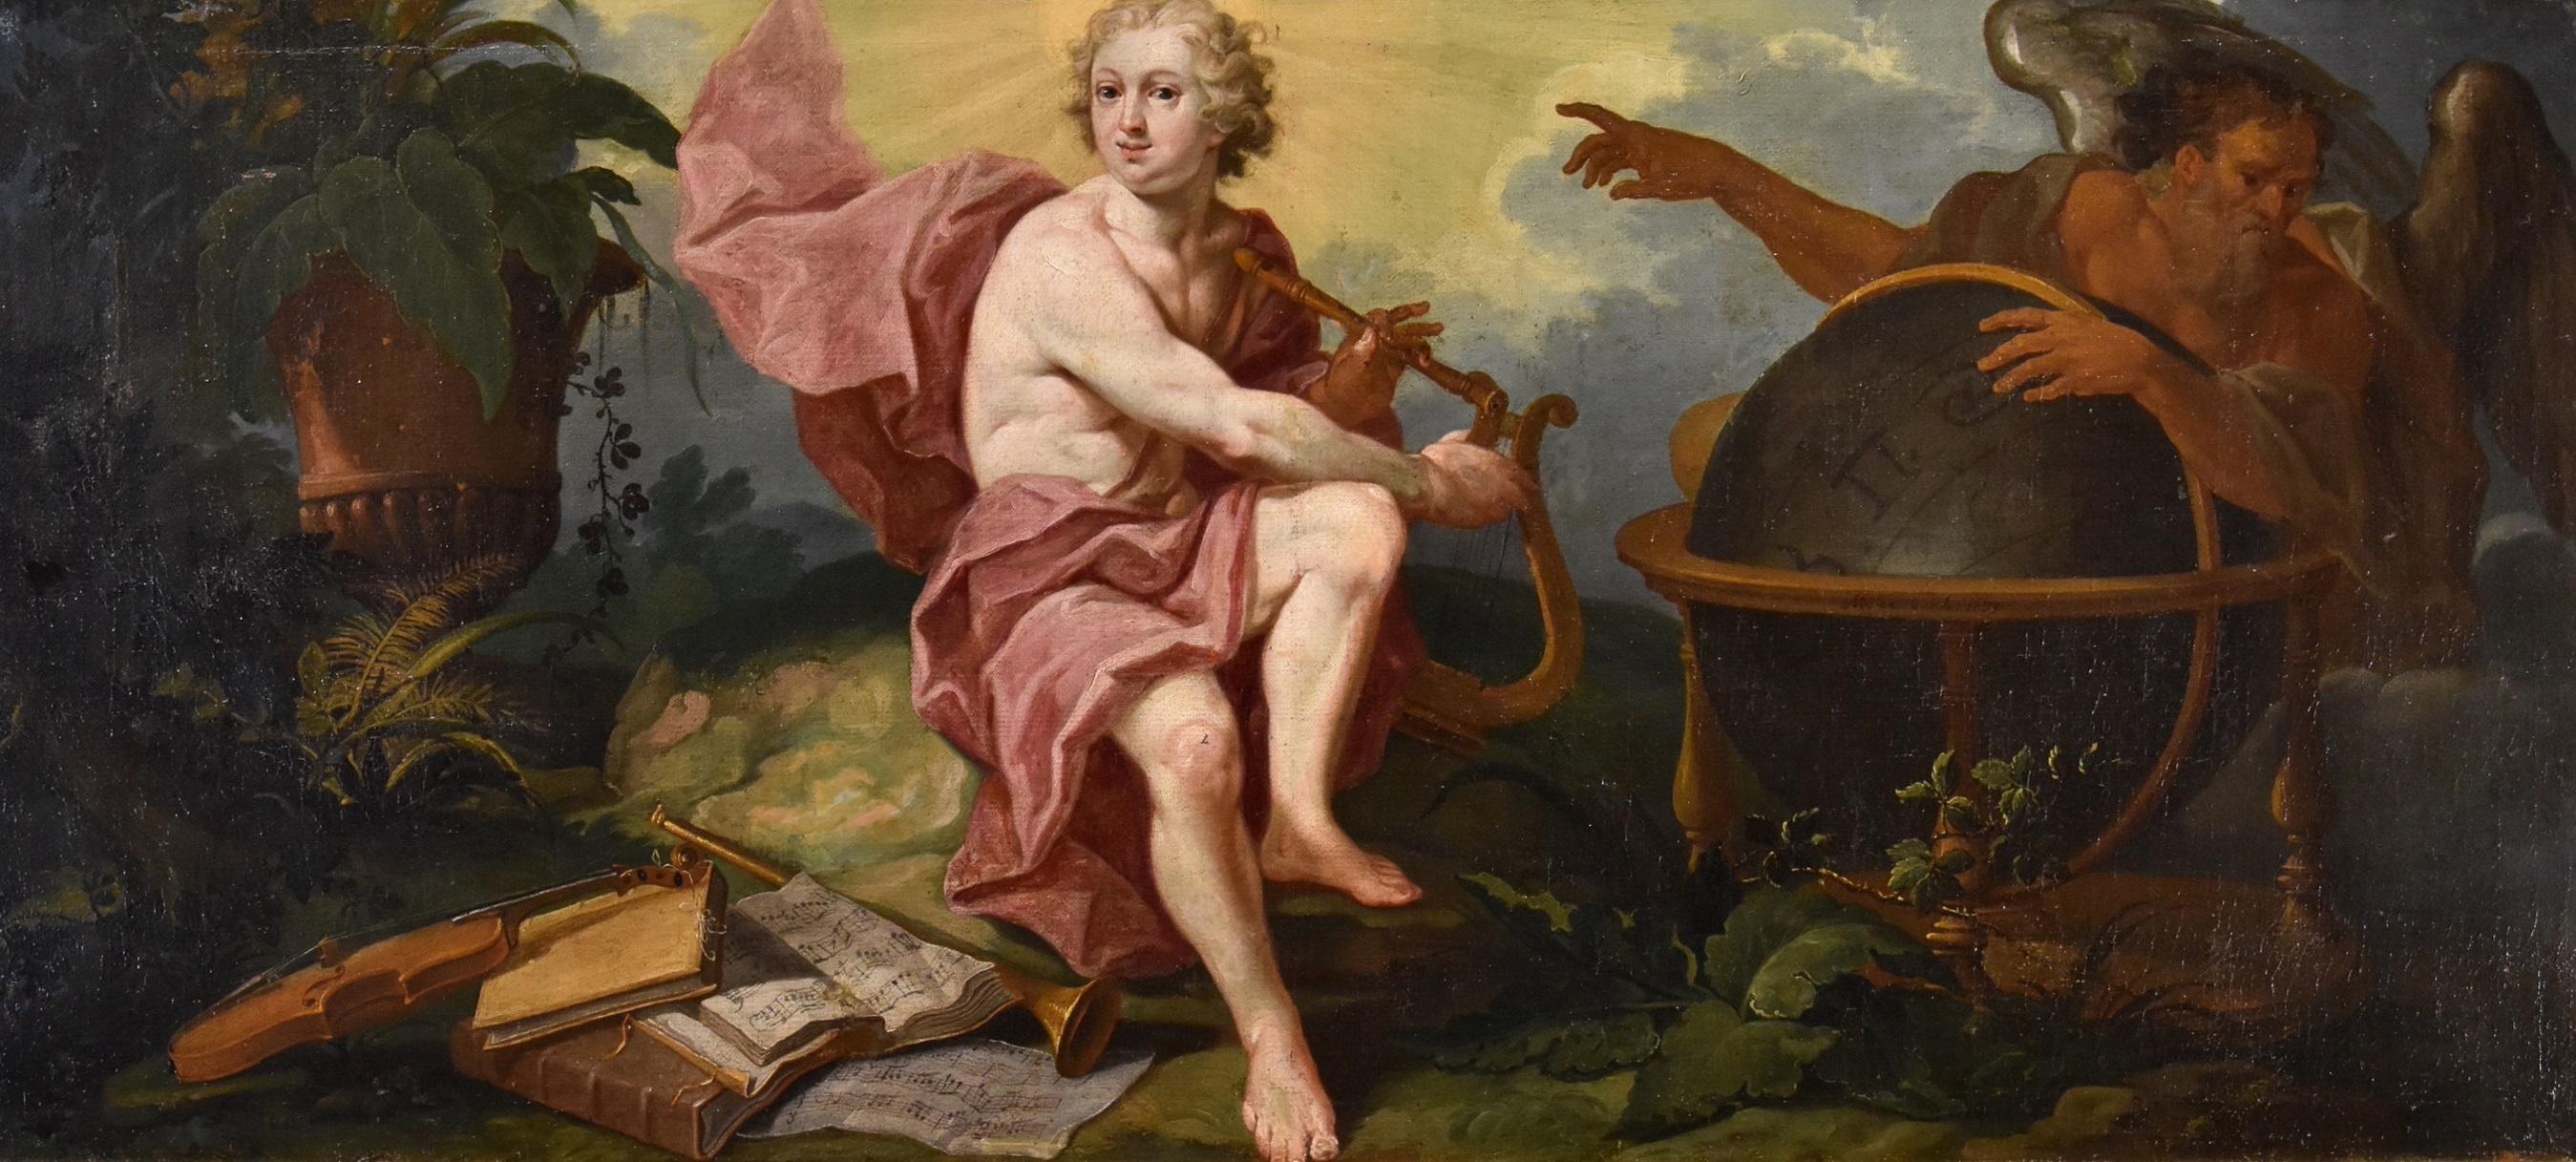 Allegory Triumph Of Art Over Time De Visch Gemälde 18. Jahrhundert Öl auf Leinwand Kunst 